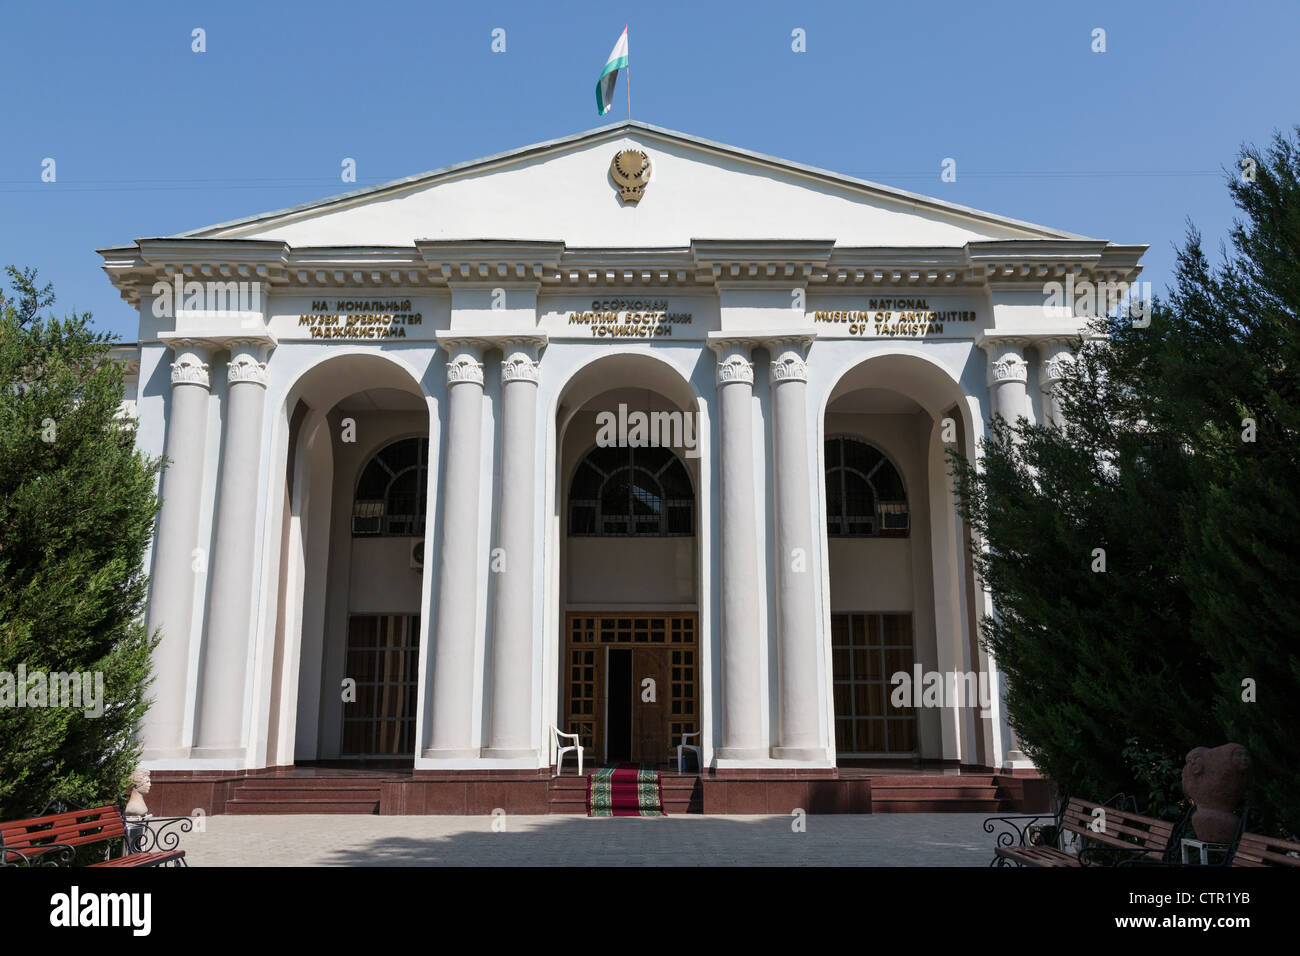 entrance, National Museum of Antiquities of Tajikistan, Dushanbe, Tajikistan Stock Photo